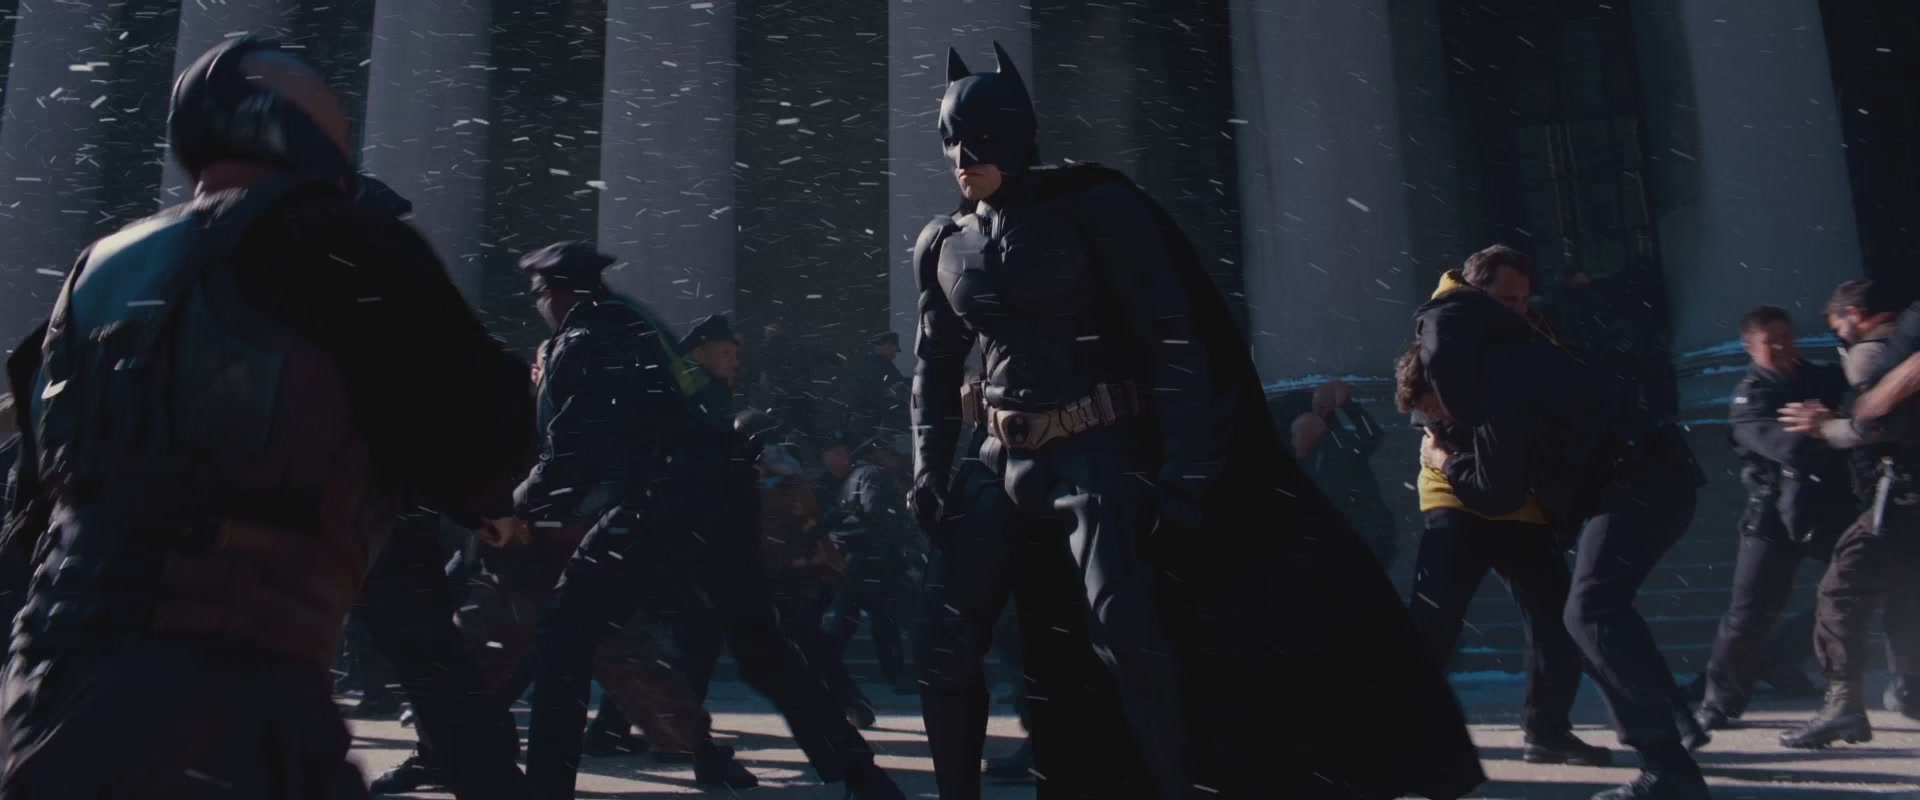 The Dark Knight Rises: Trailer #1 (HD) - Batman Image (27910344 ...